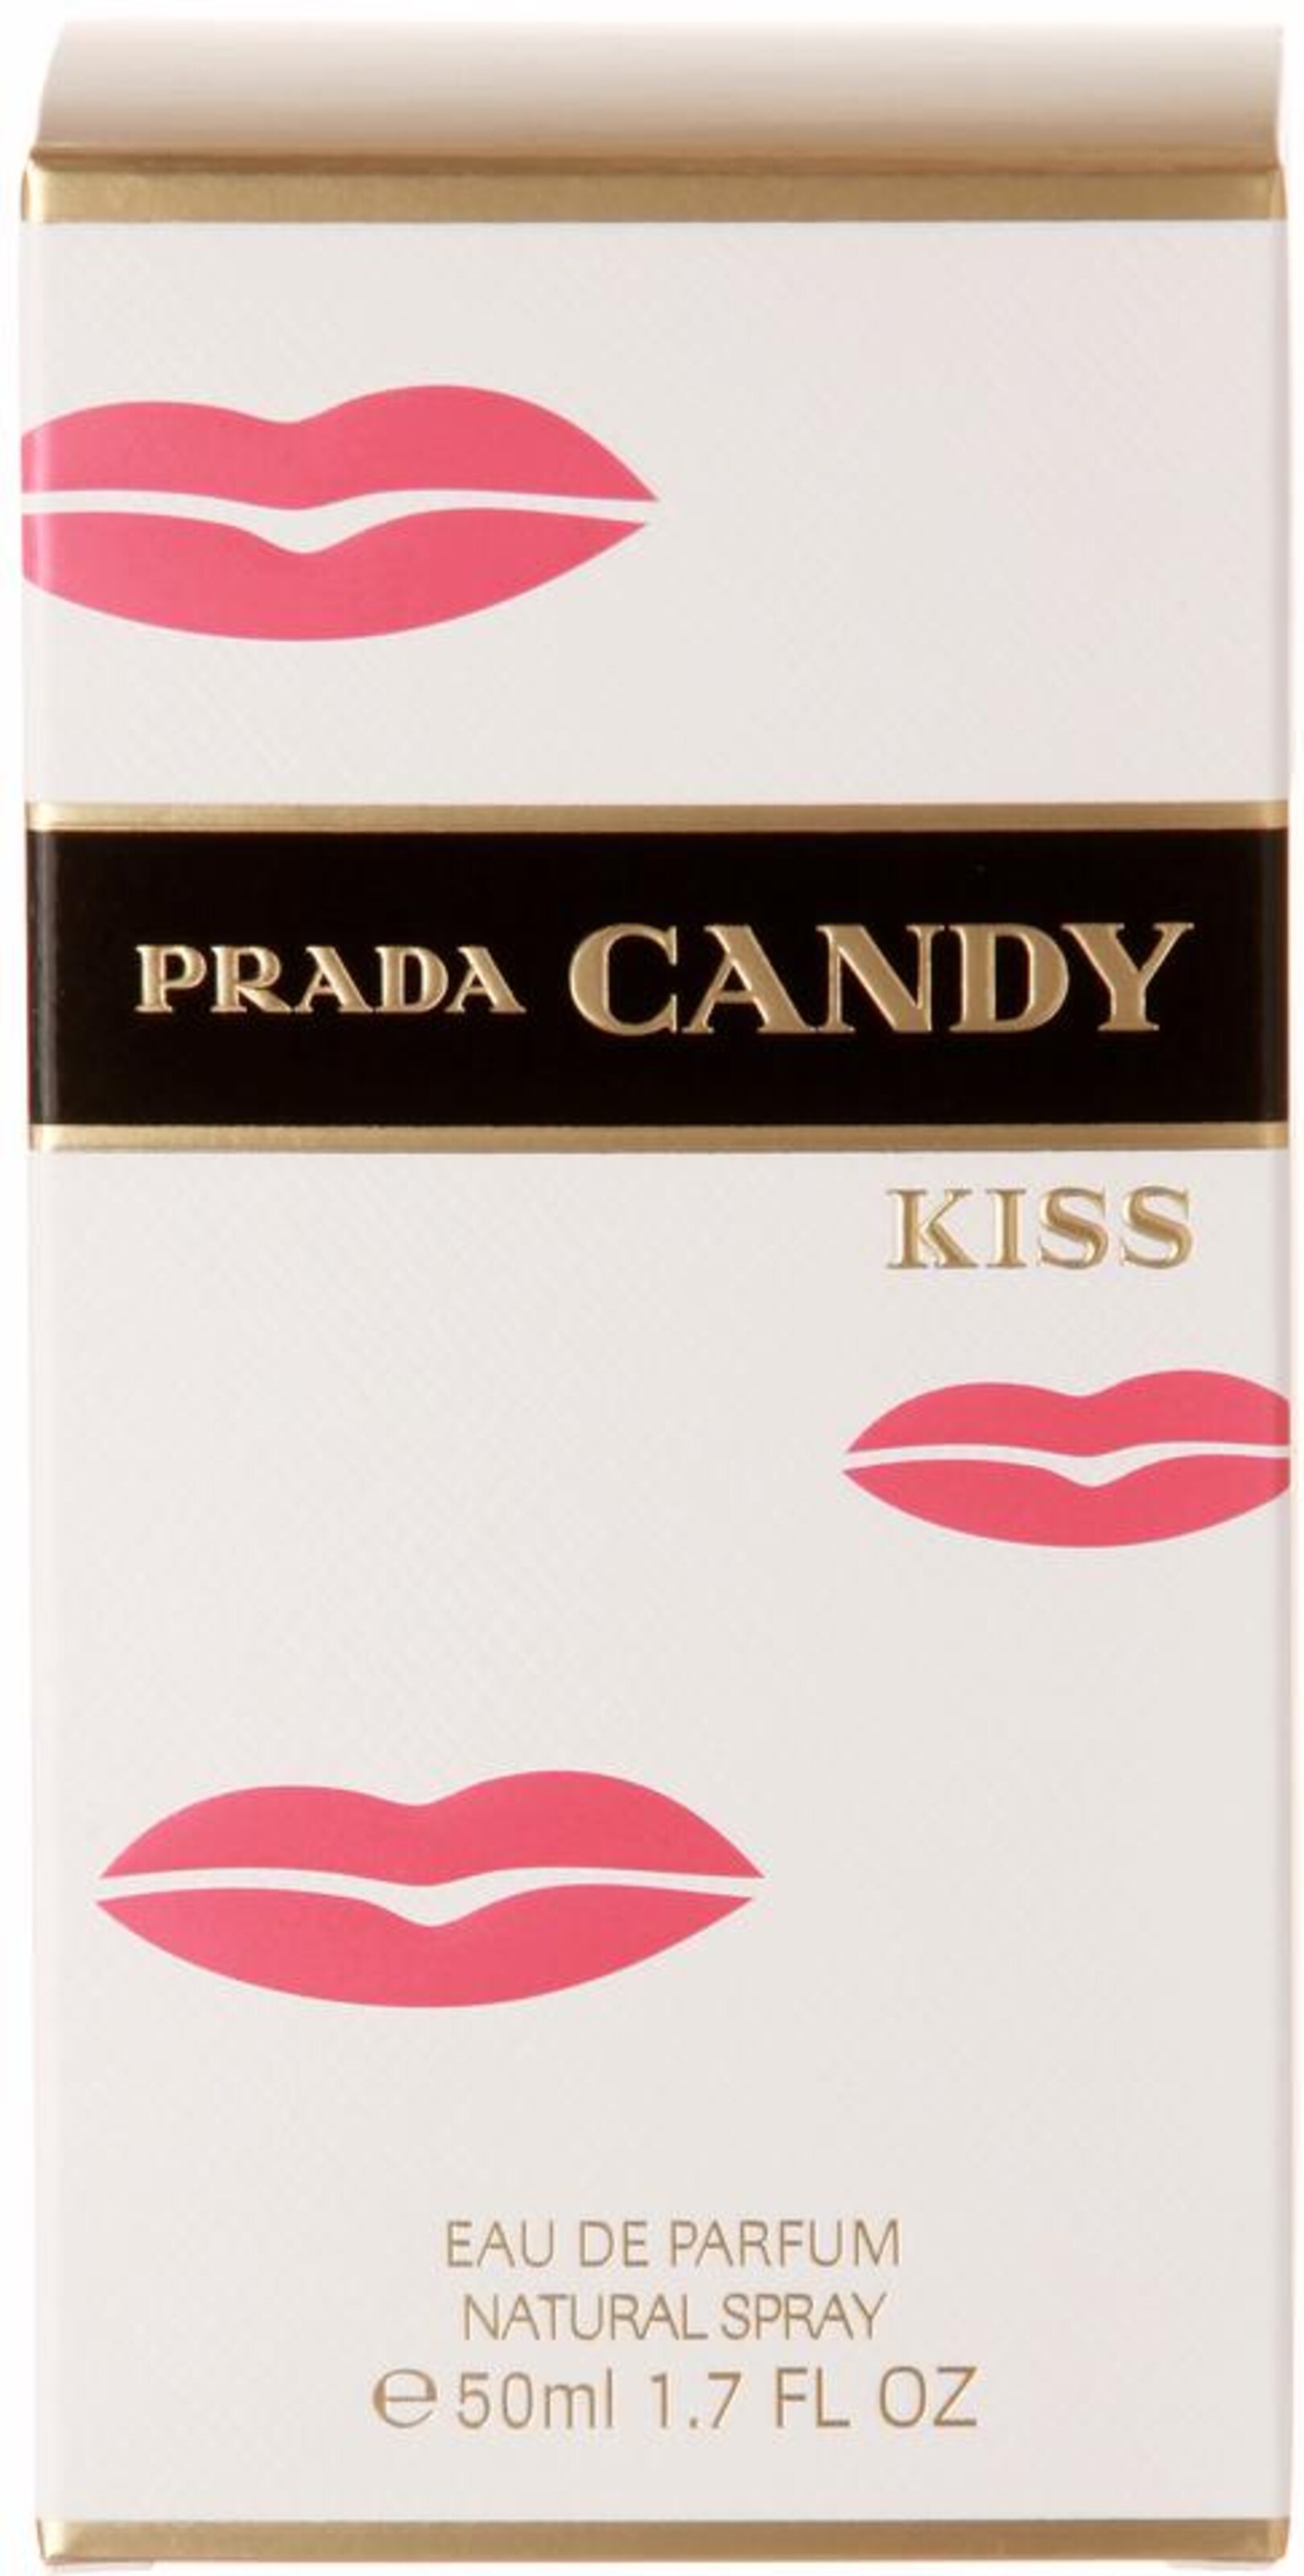 PRADA Candy Kiss Eau de Parfum in Nude 